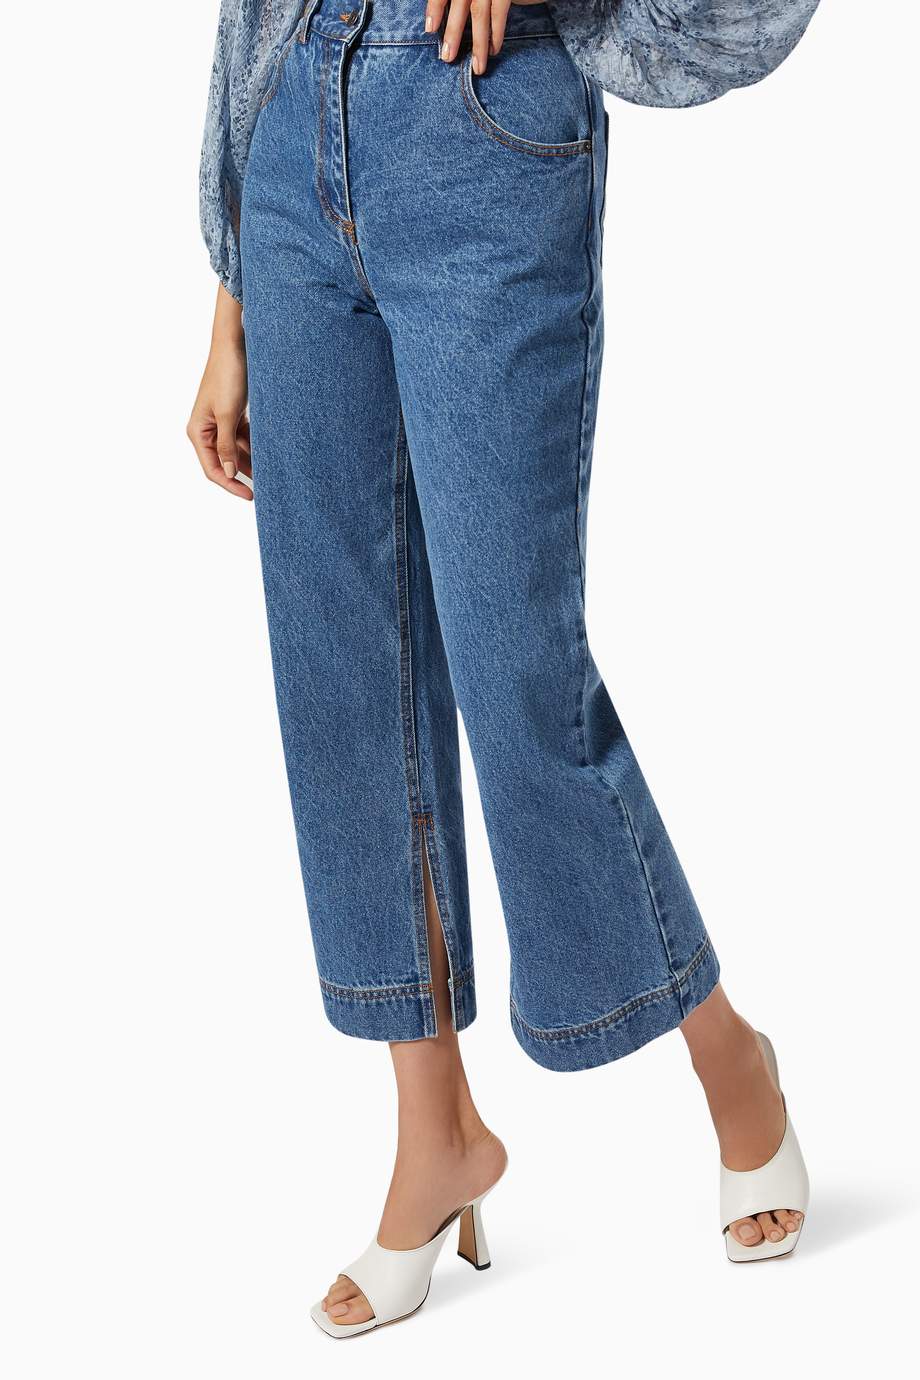 Shop SHONA JOY Blue Emily Straight Leg Jeans with Split for Women ...